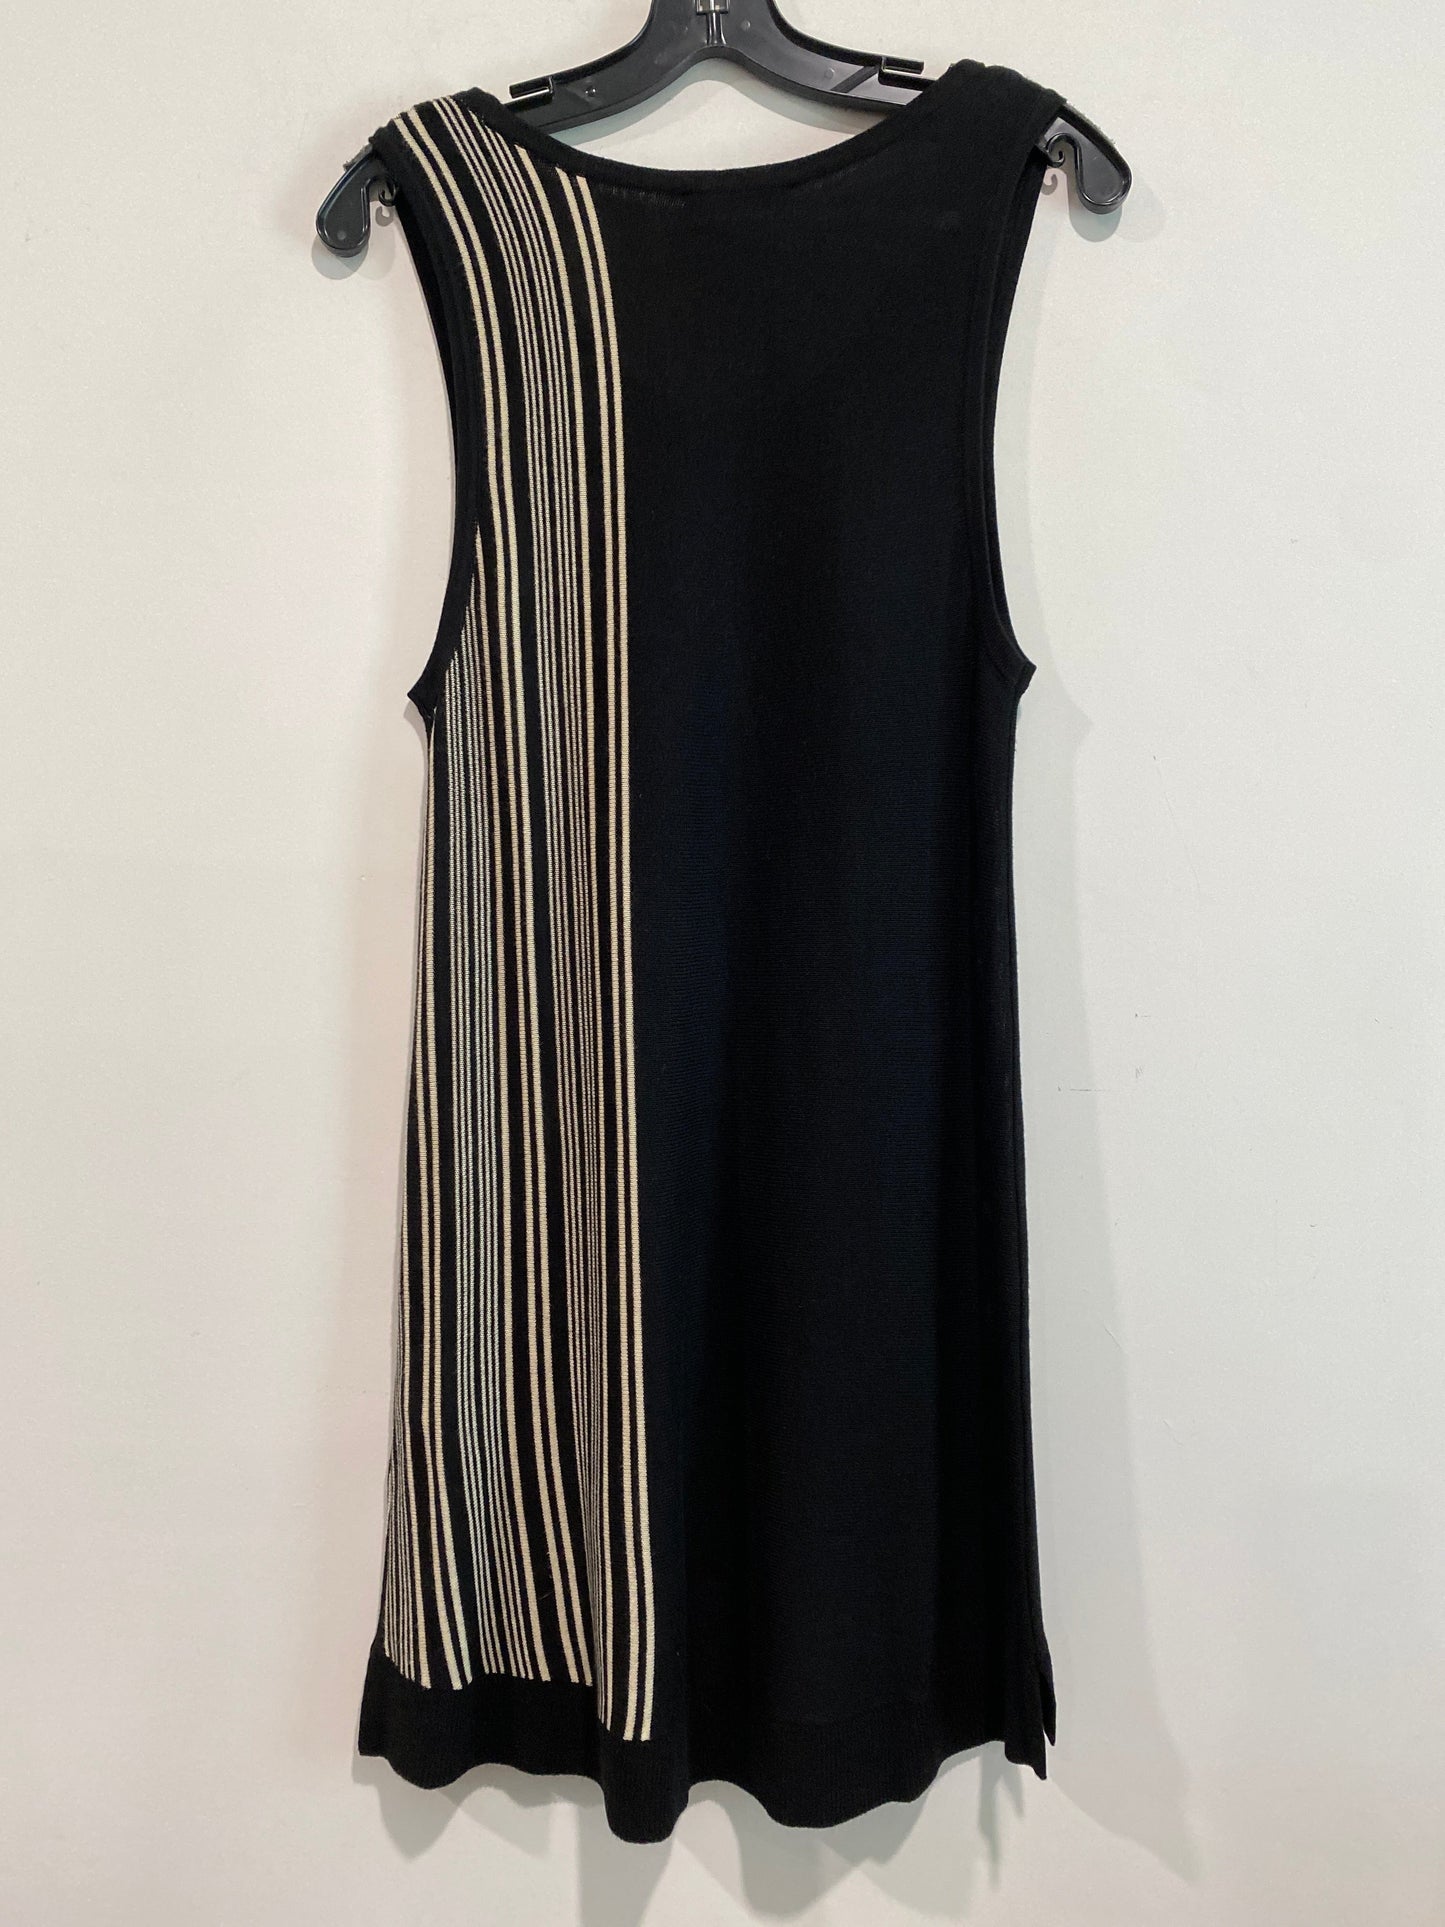 Dress  Sleeveless By Donna Karan  Size: M